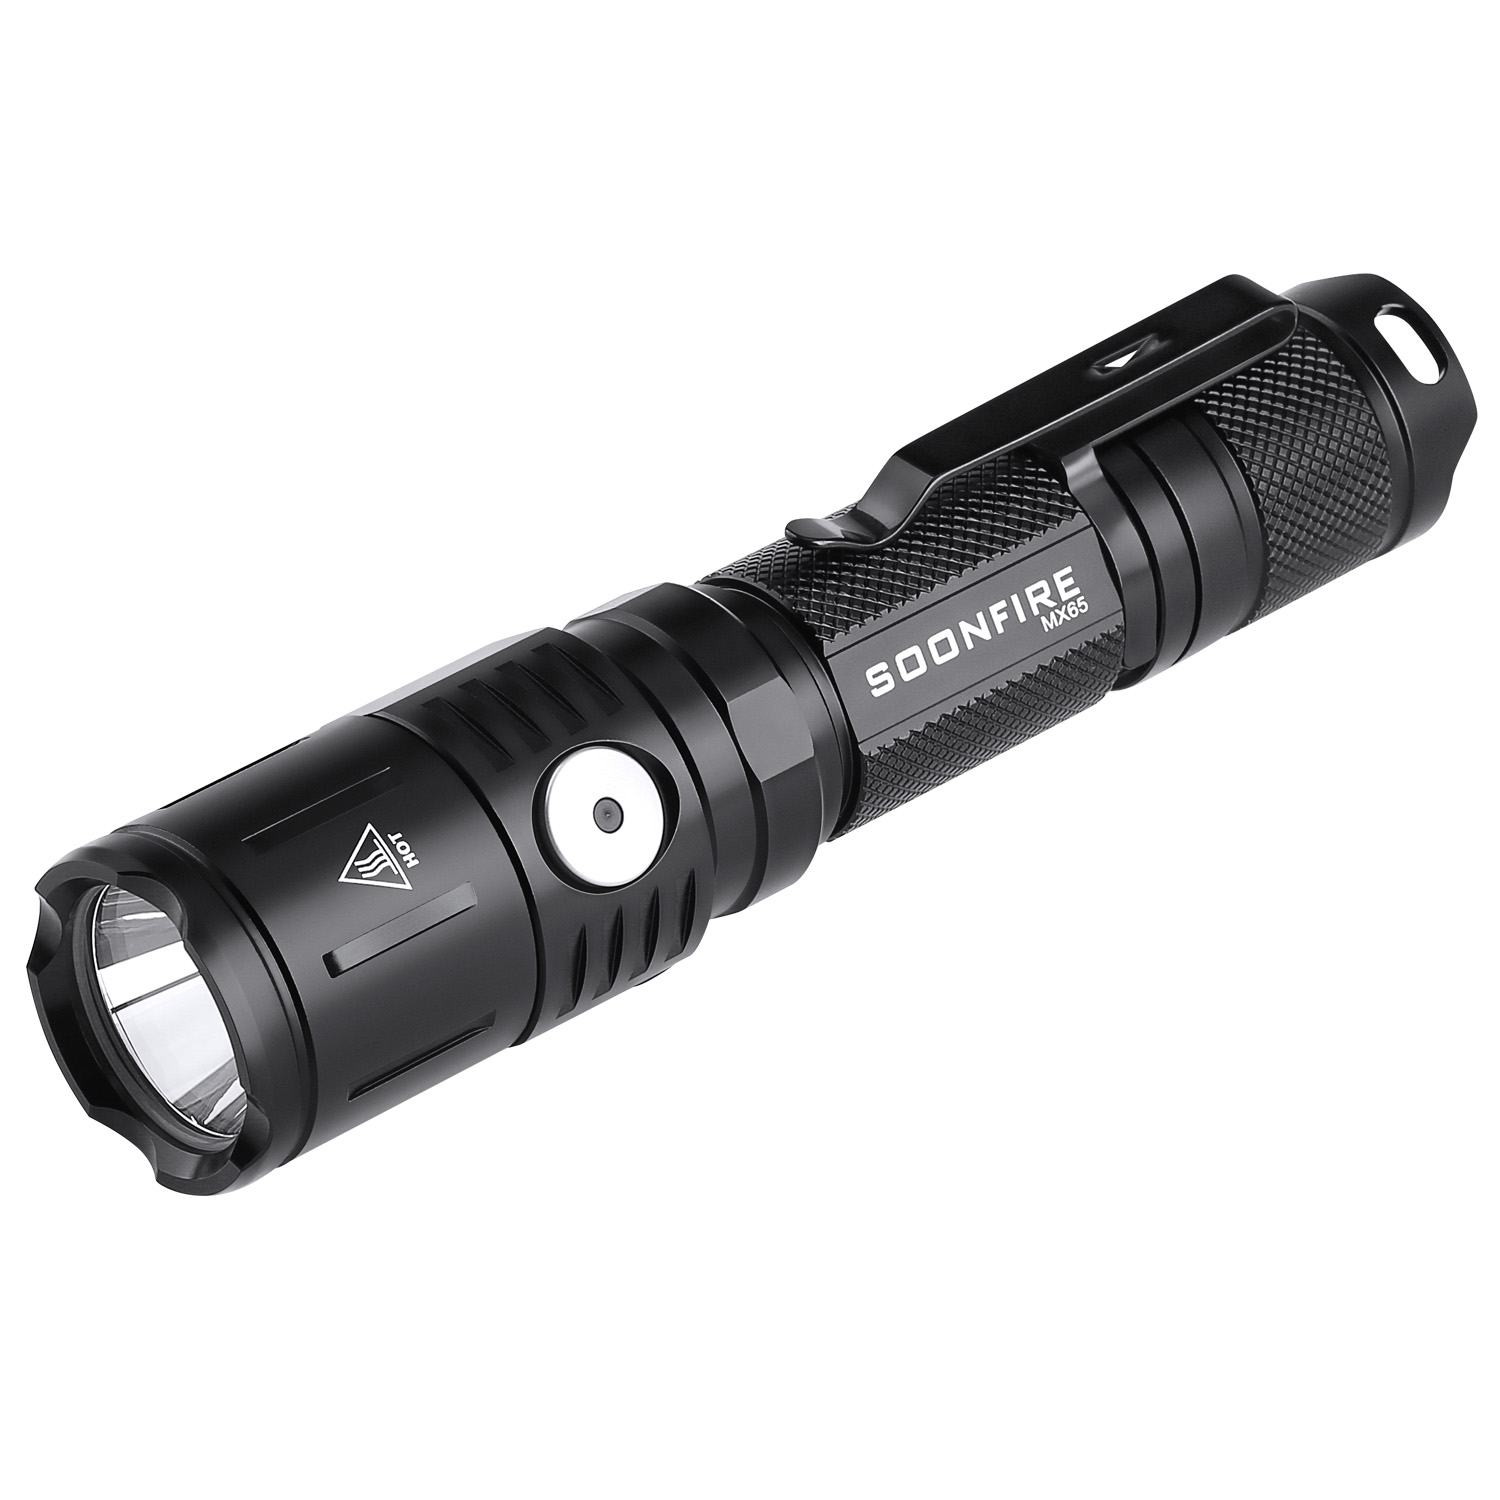 Soonfire MX Series 1060 Lumens Tactical Flashlight(Black)